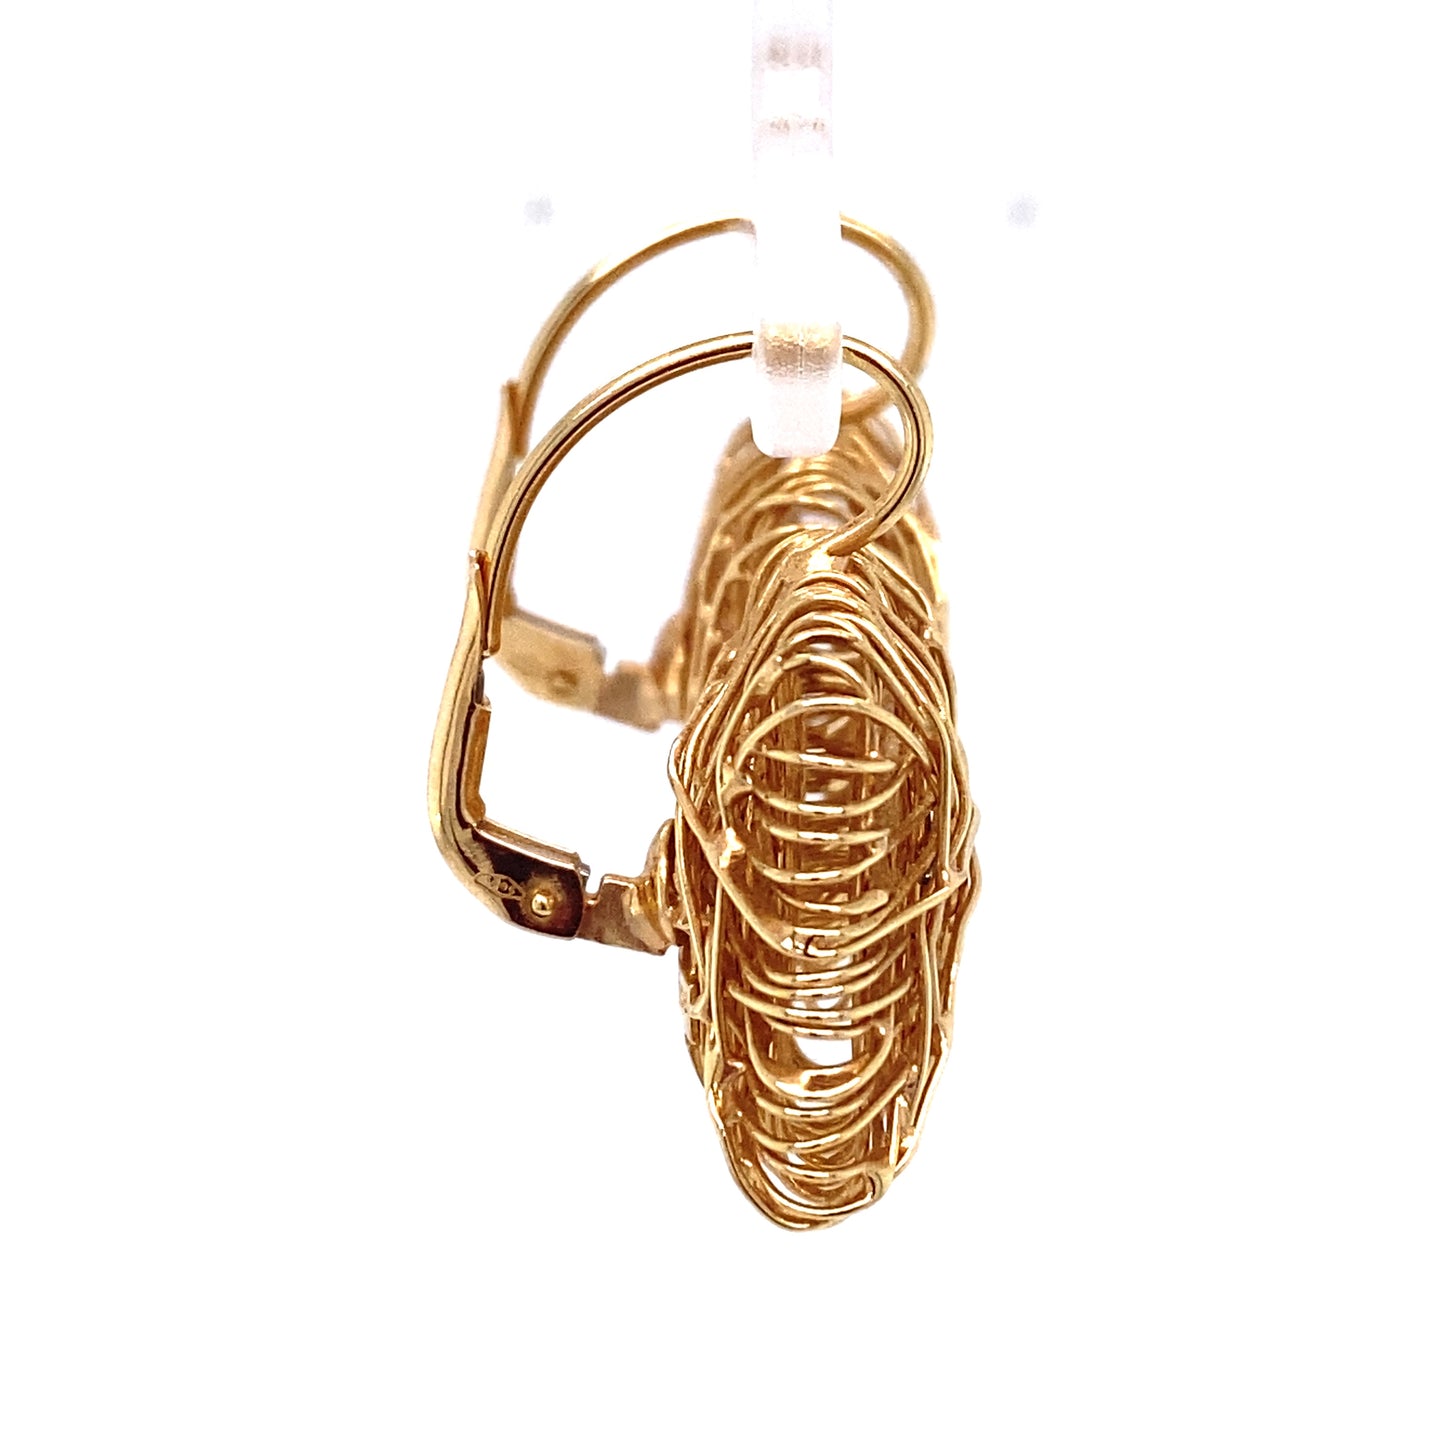 Circa 1970s Italian Square Crosshatch Dangle Earrings in 14K Gold